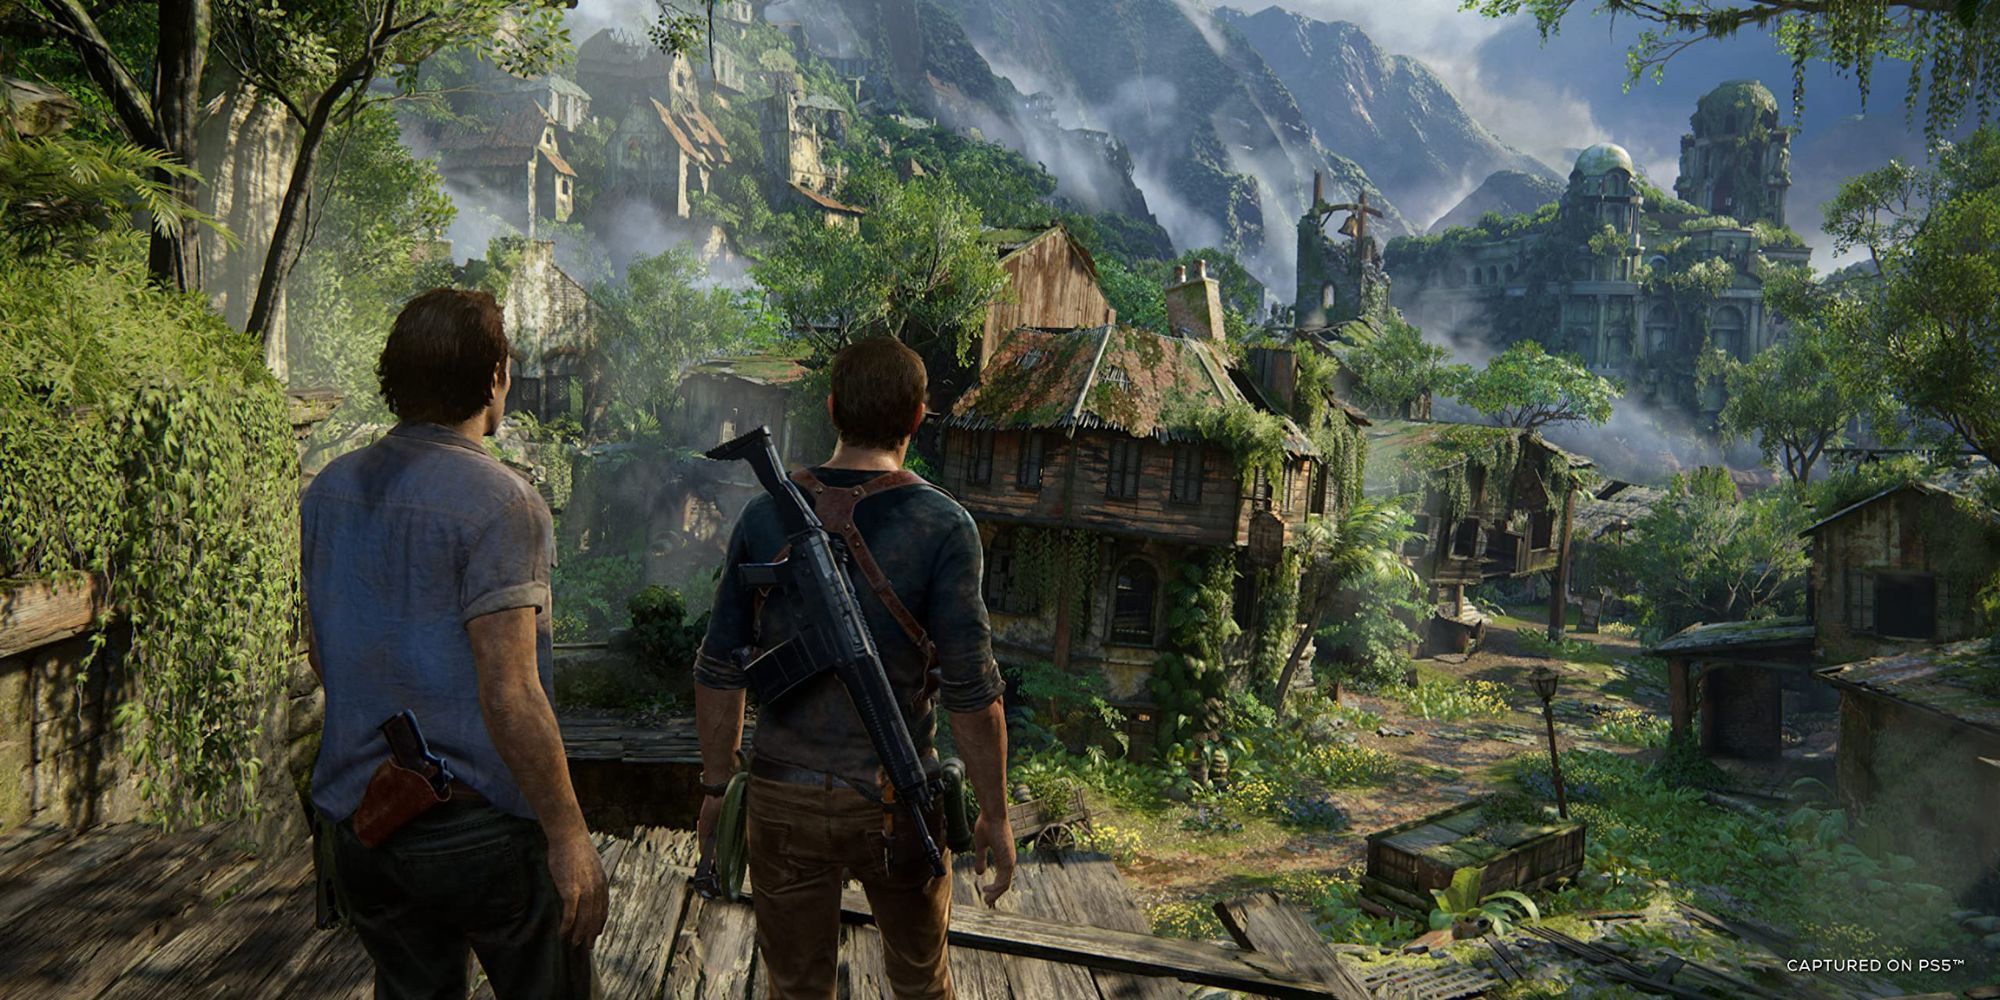 Nathan and Sam stand at the entrance of ruins